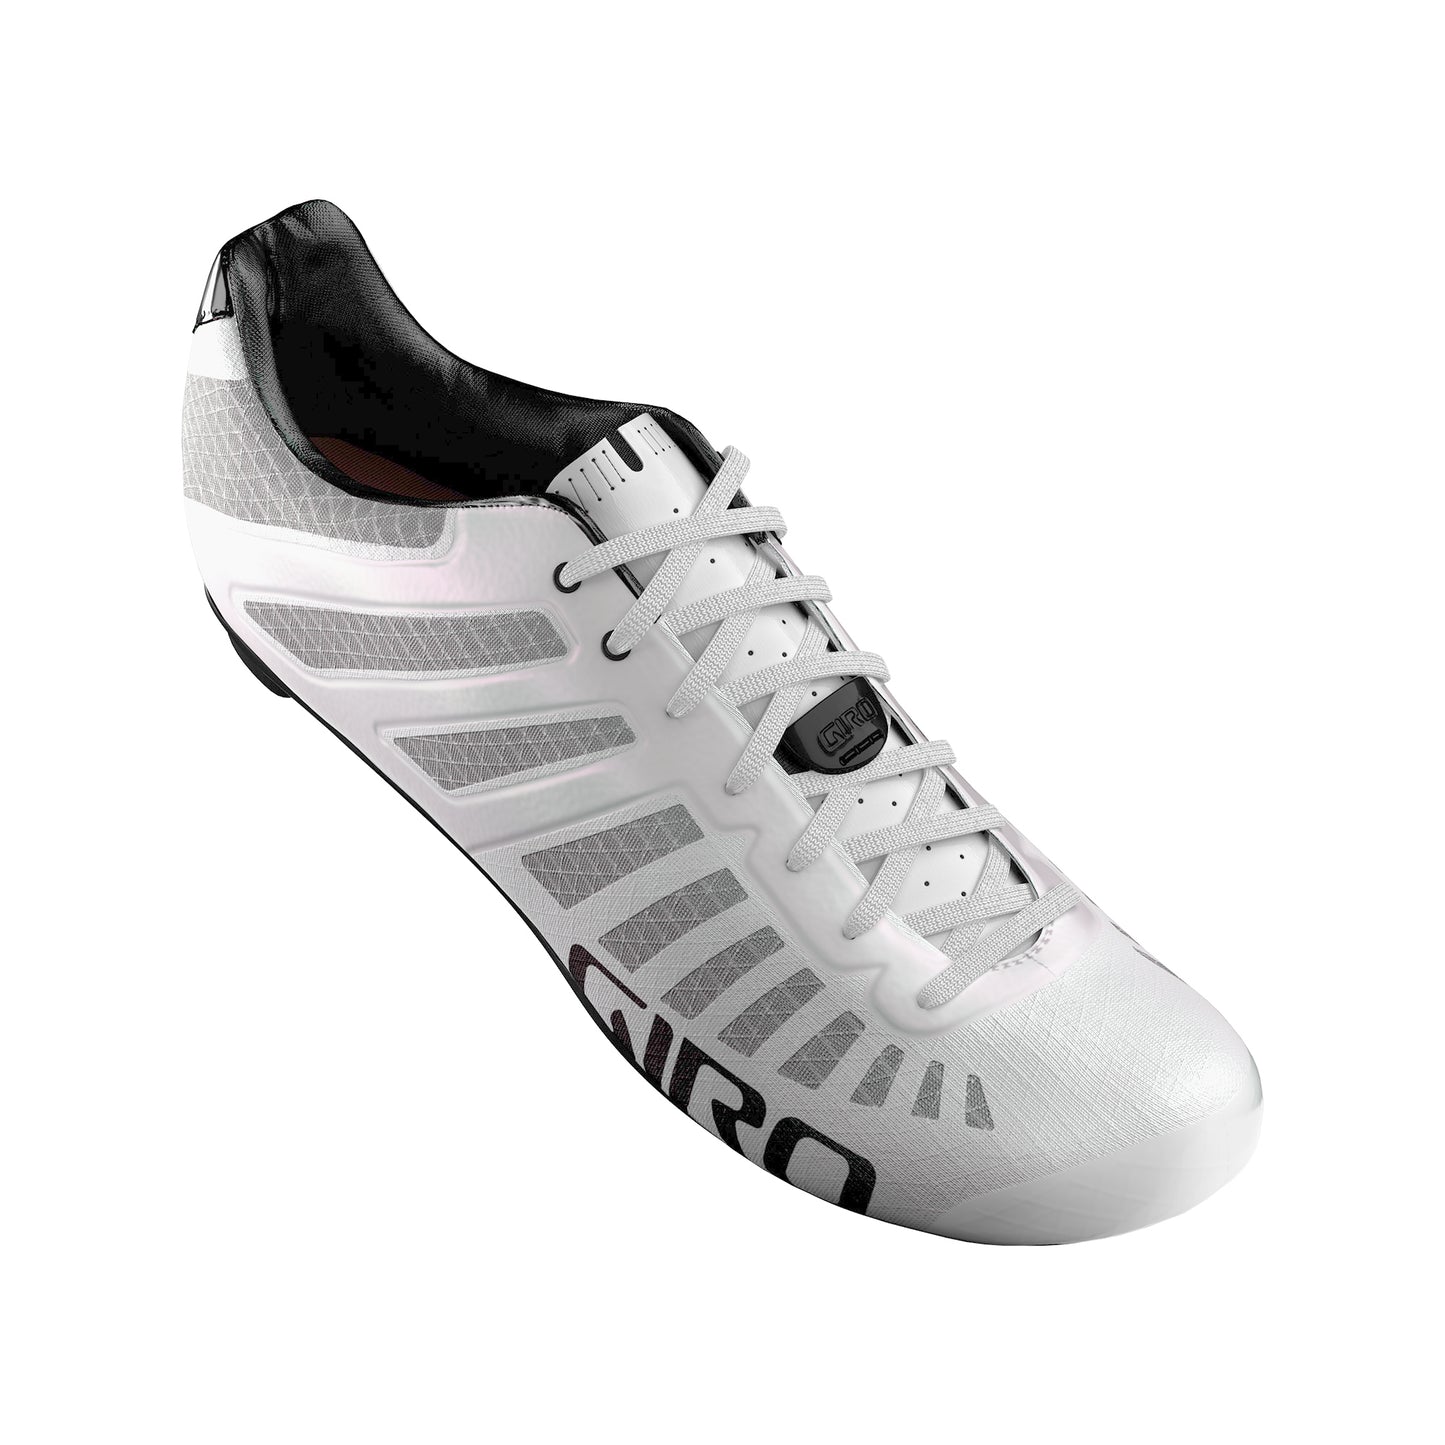 Giro Empire SLX Shoe Crystal White Bike Shoes